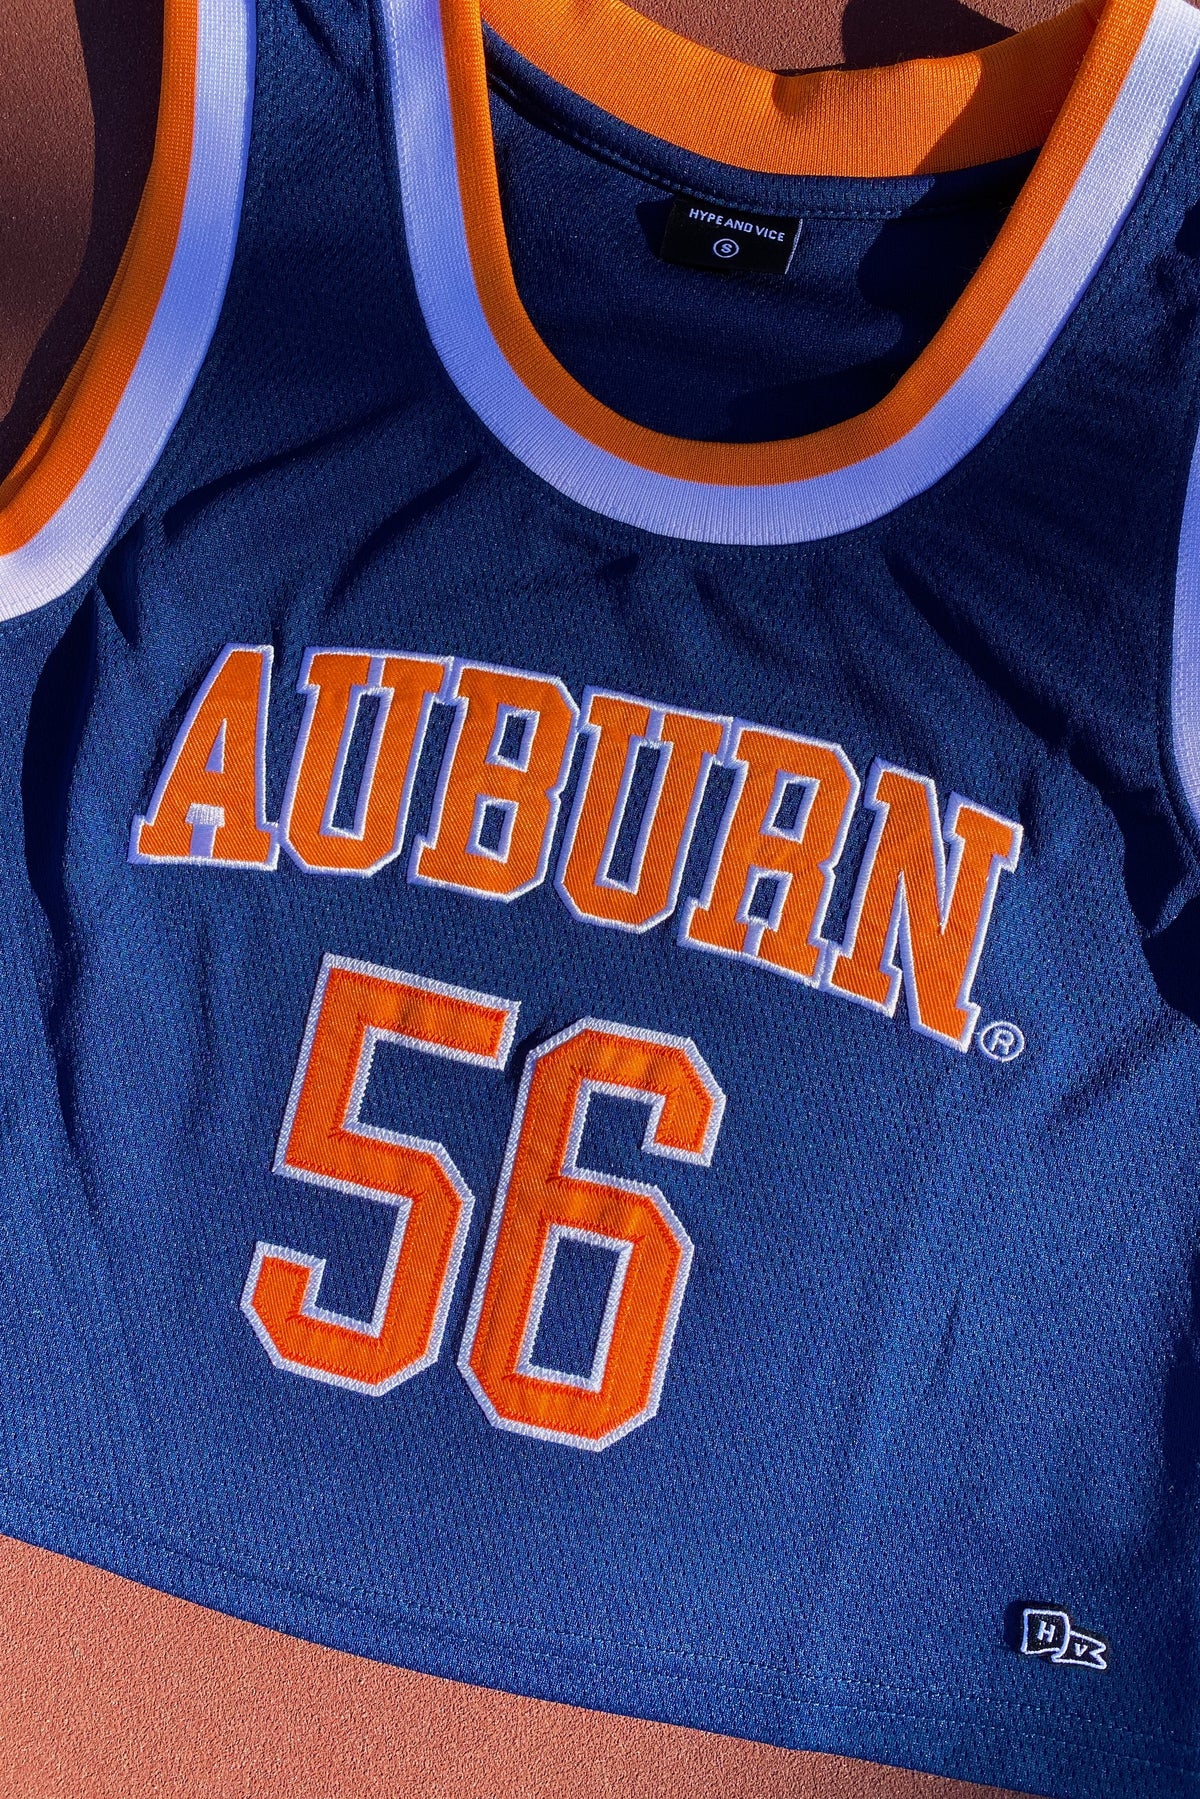 Auburn University Basketball Top